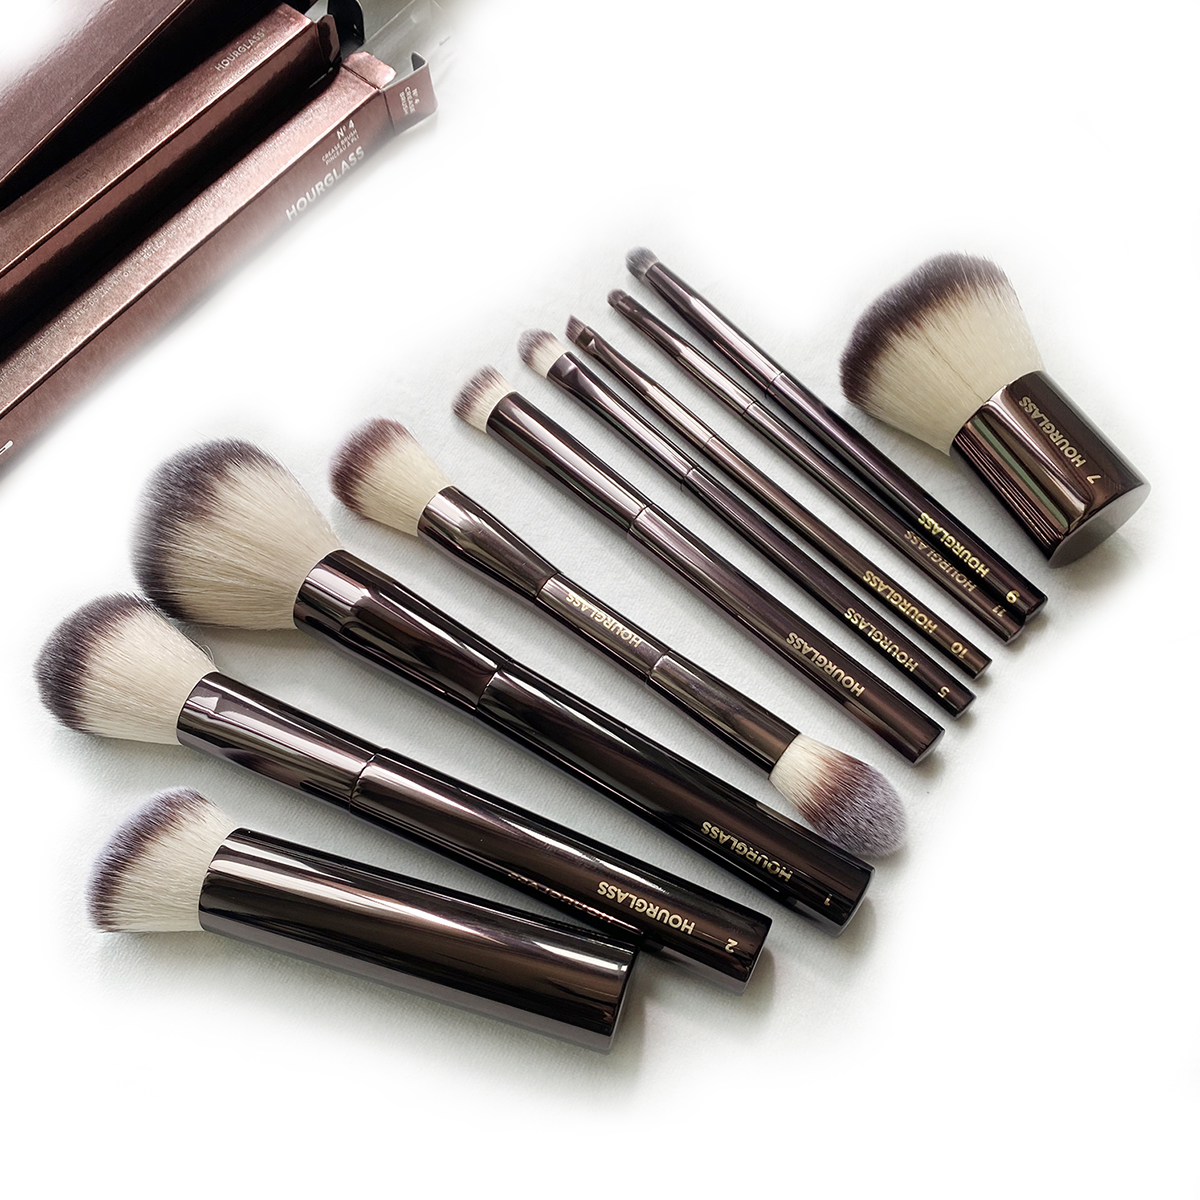 

Hourglass Makeup Brushes Set - 10Pcs Powder Blush Eye Shadow Crease Concealer Brow Liner Smudger Dark-Bronze Metal Handle Cosmetics Blending Tools